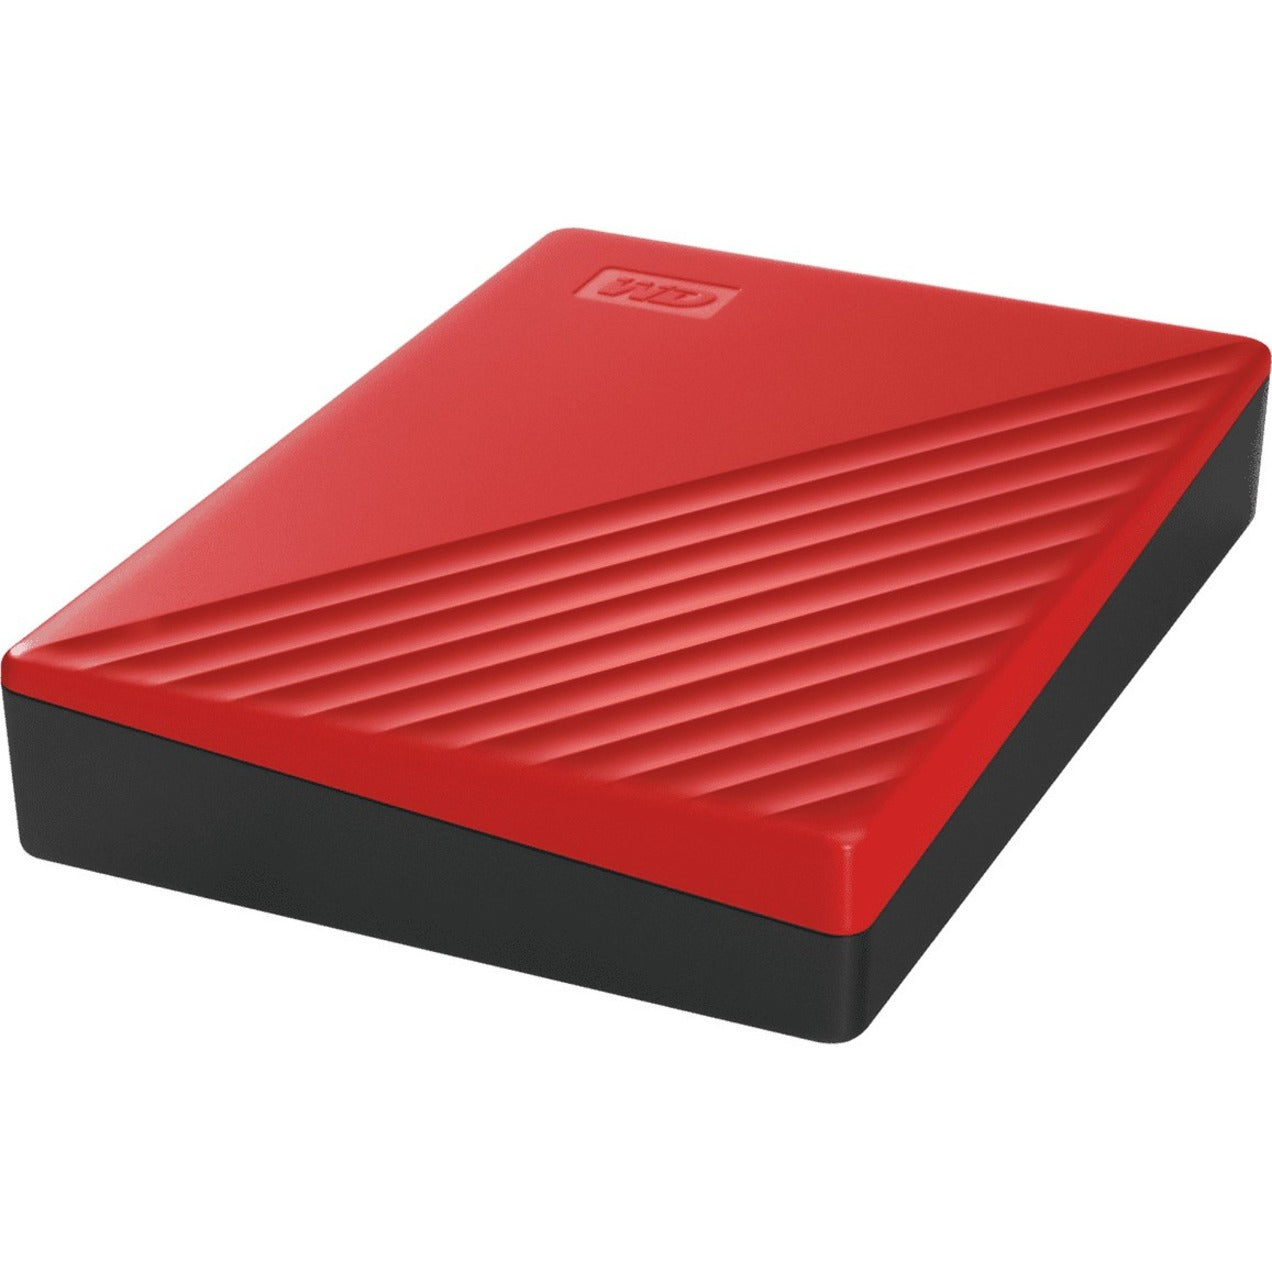 WD My Passport WDBPKJ0040BRD-WESN 4 TB Portable Hard Drive - External - Red